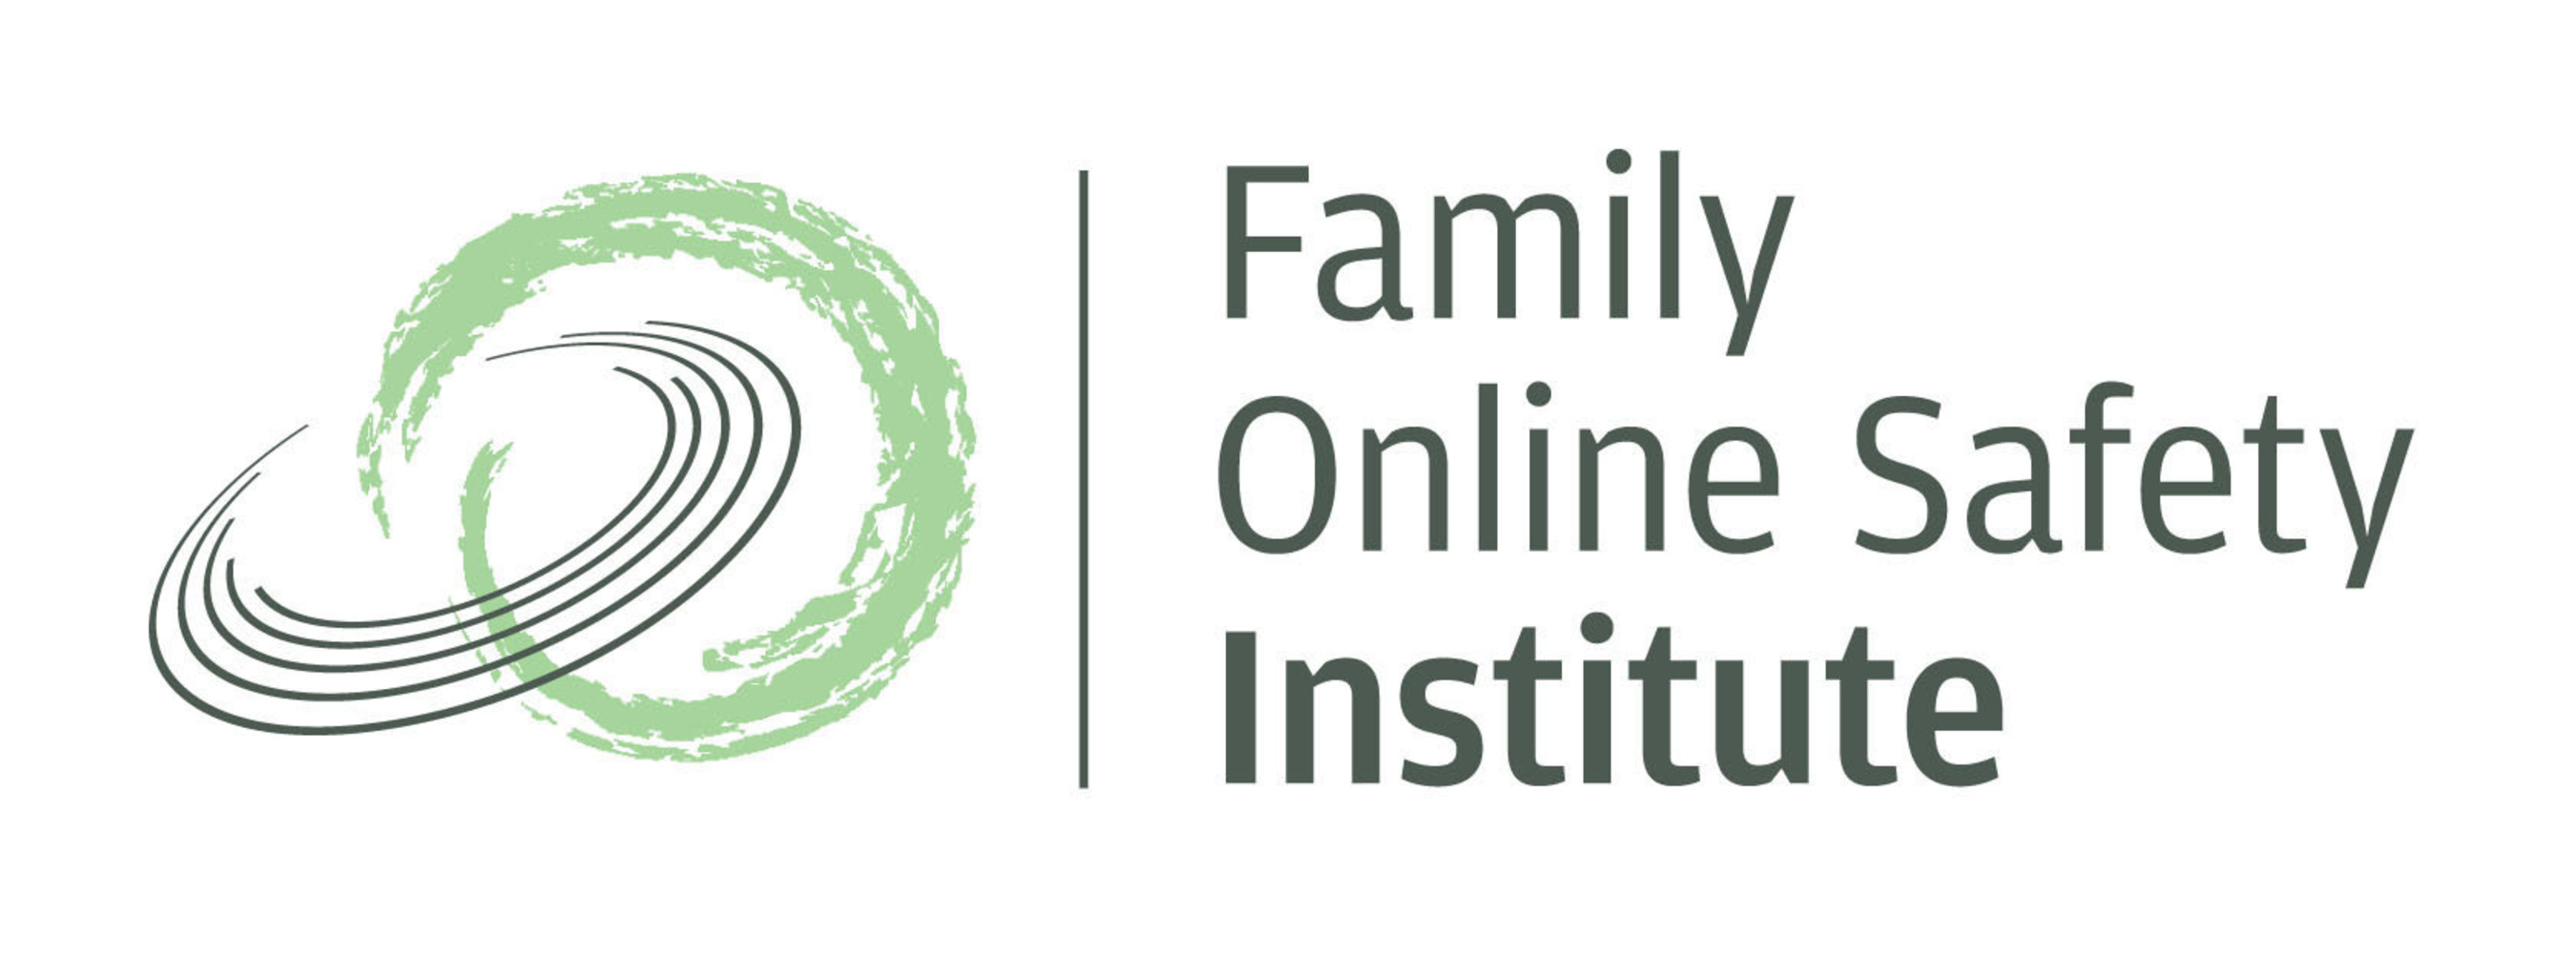 Family Online Safety Institute Logo.